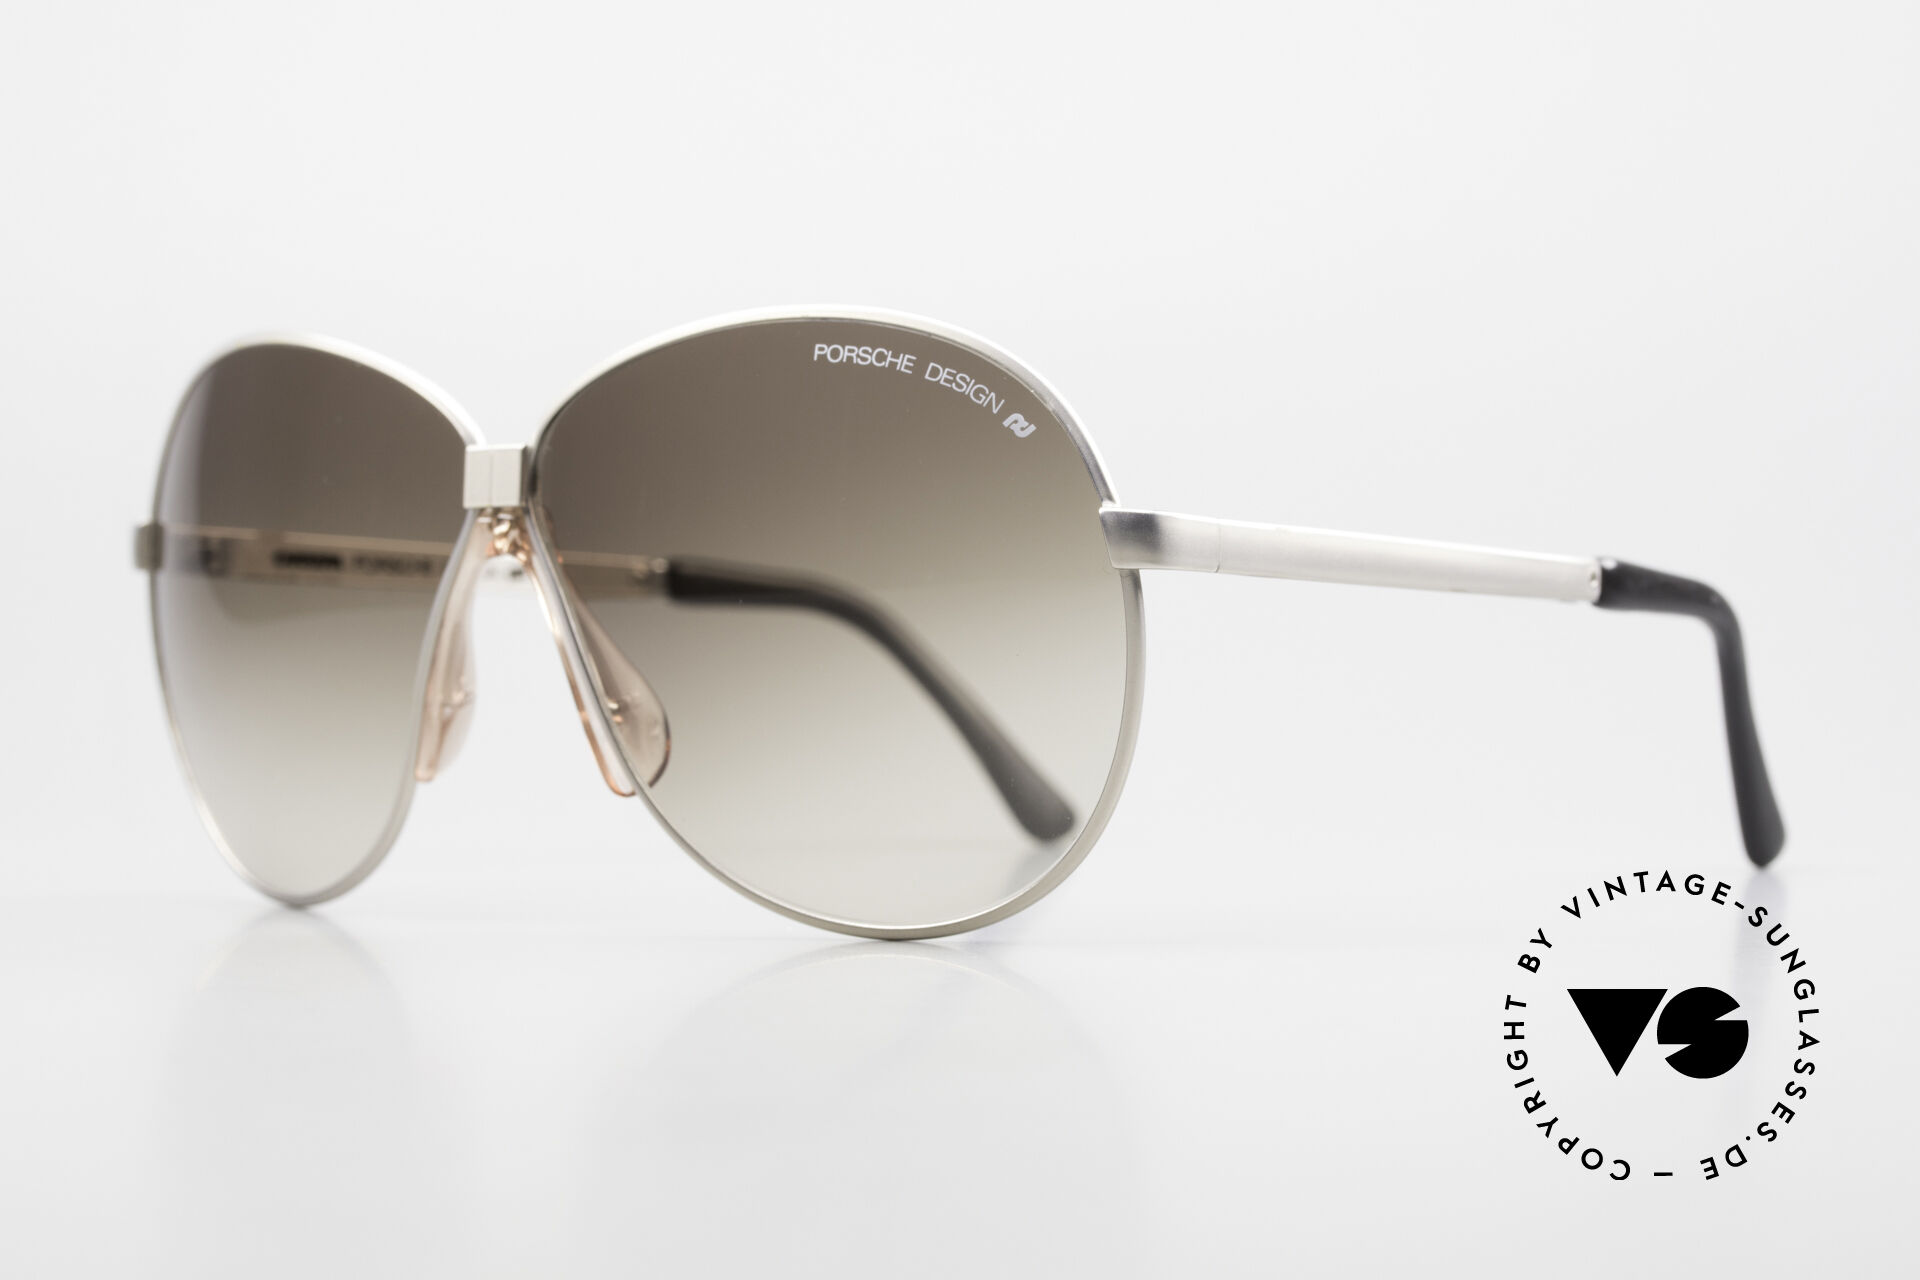 Sunglasses Porsche 5626 Ladies Foldable Sunglasses